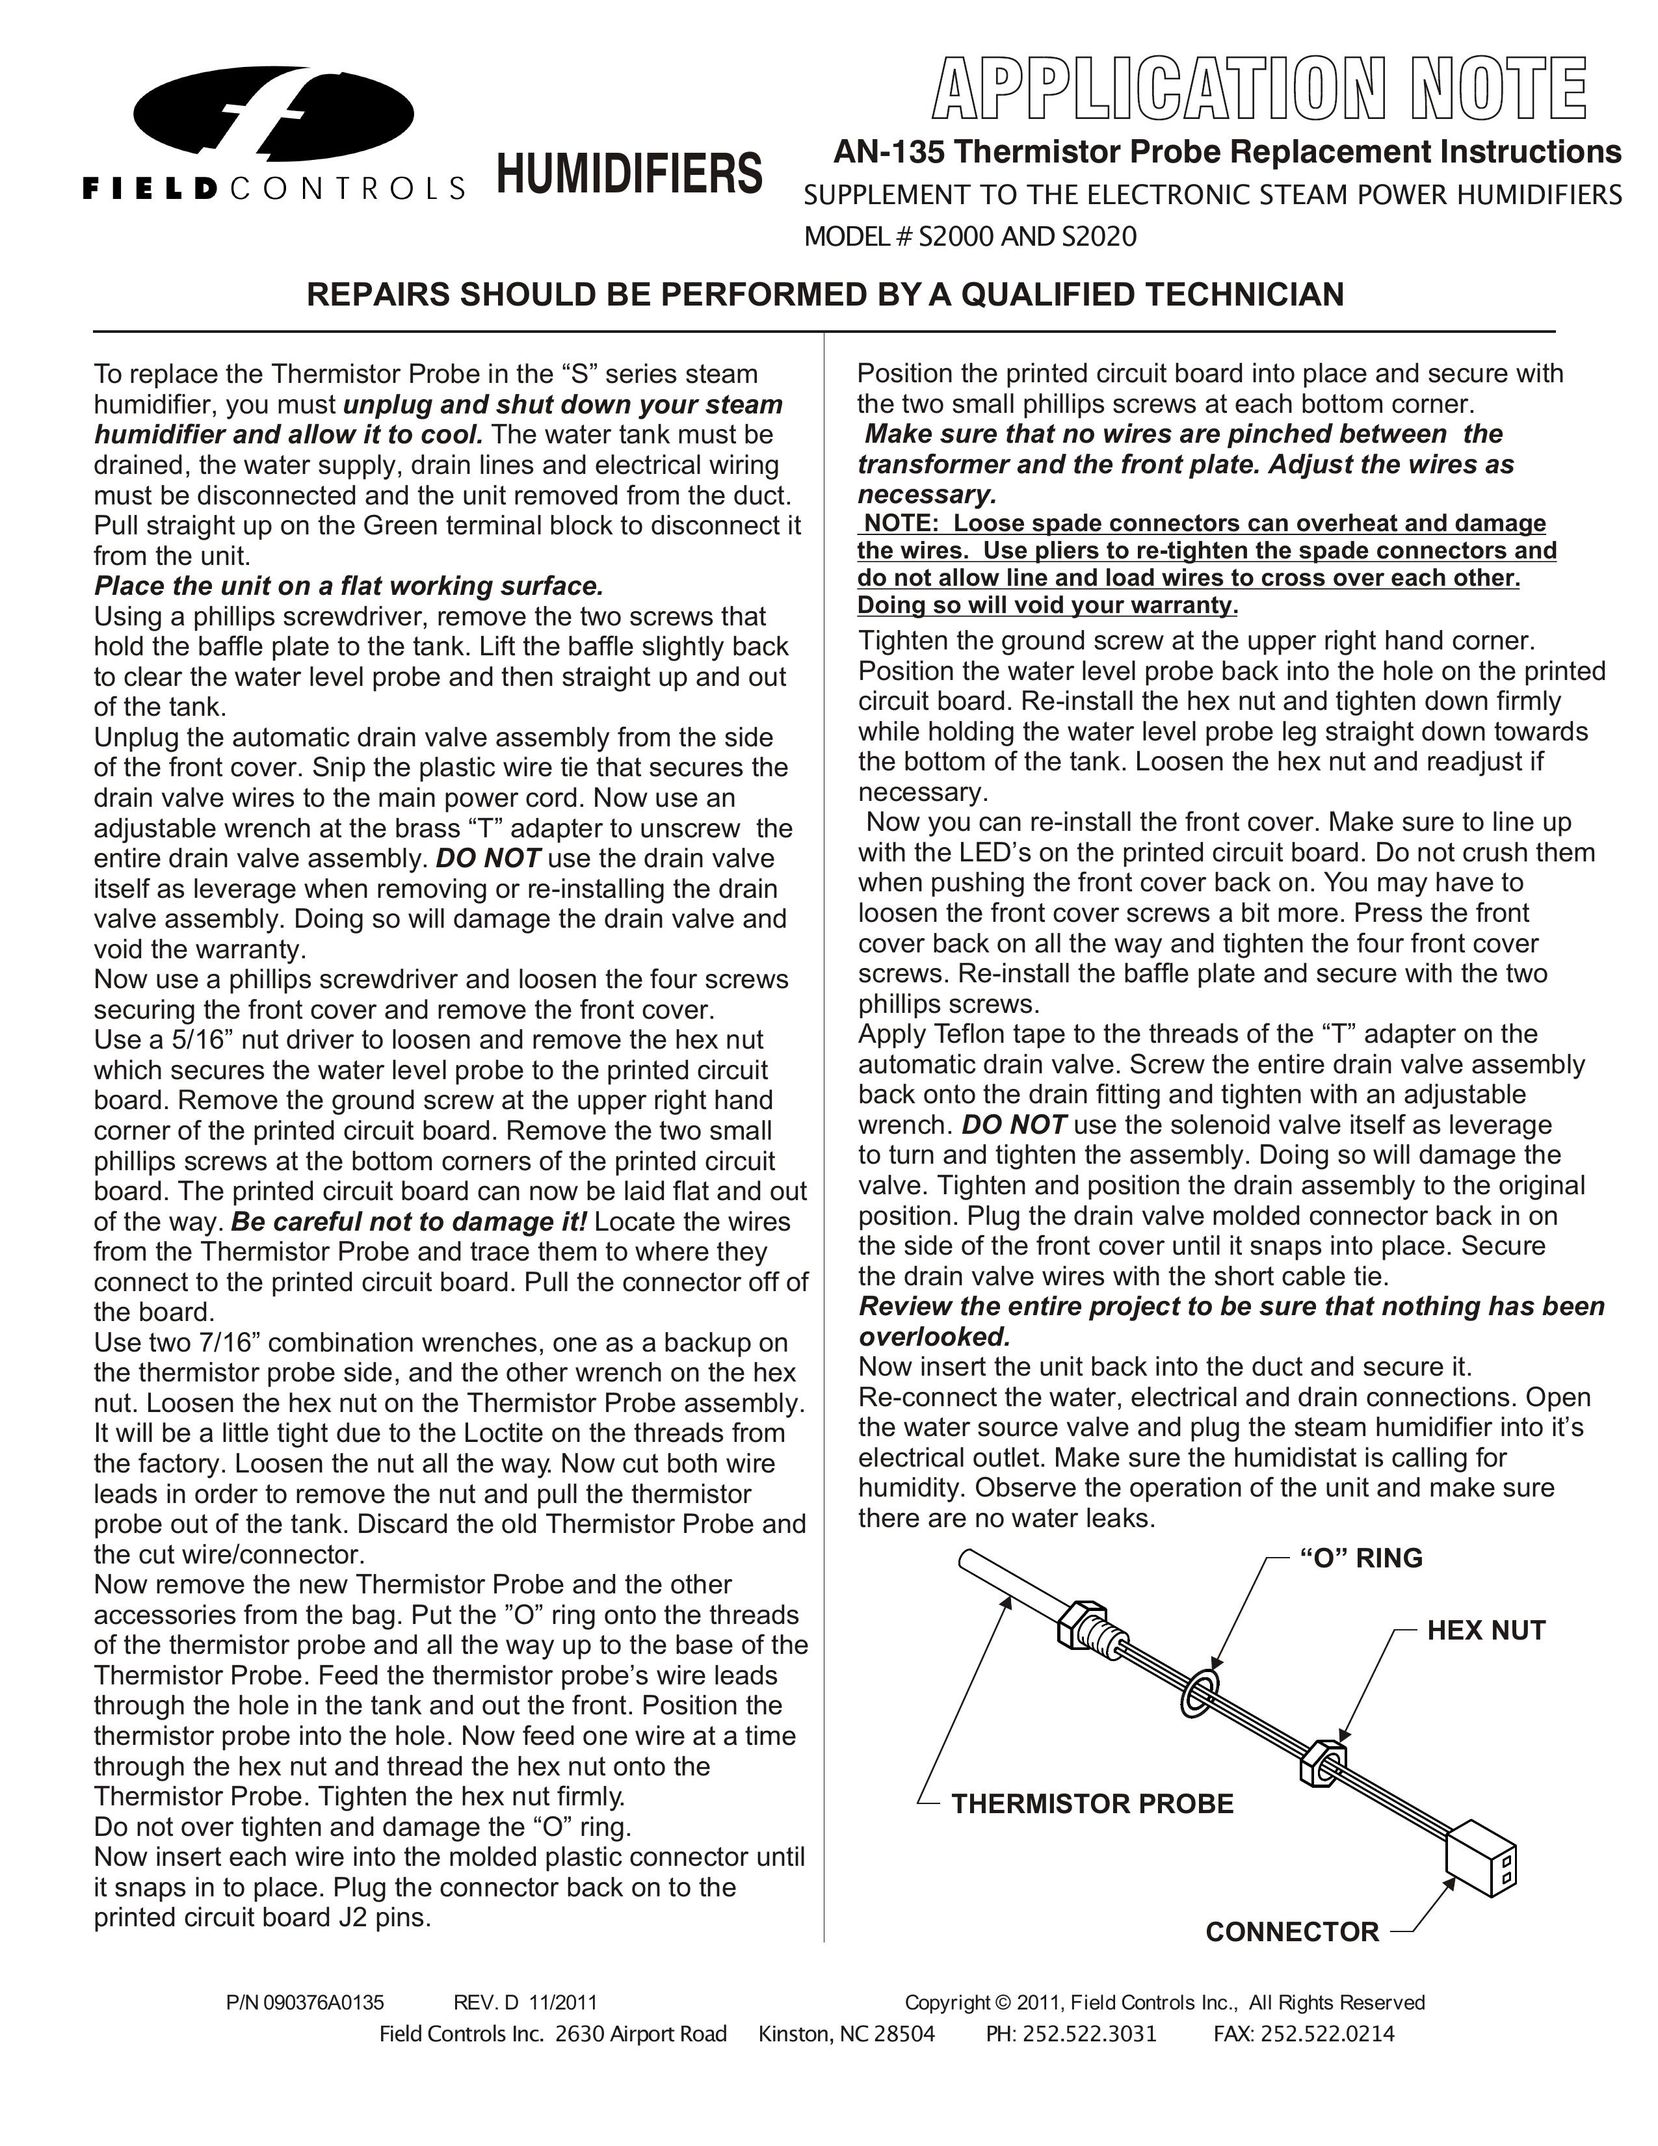 Field Controls AN-135 Humidifier User Manual